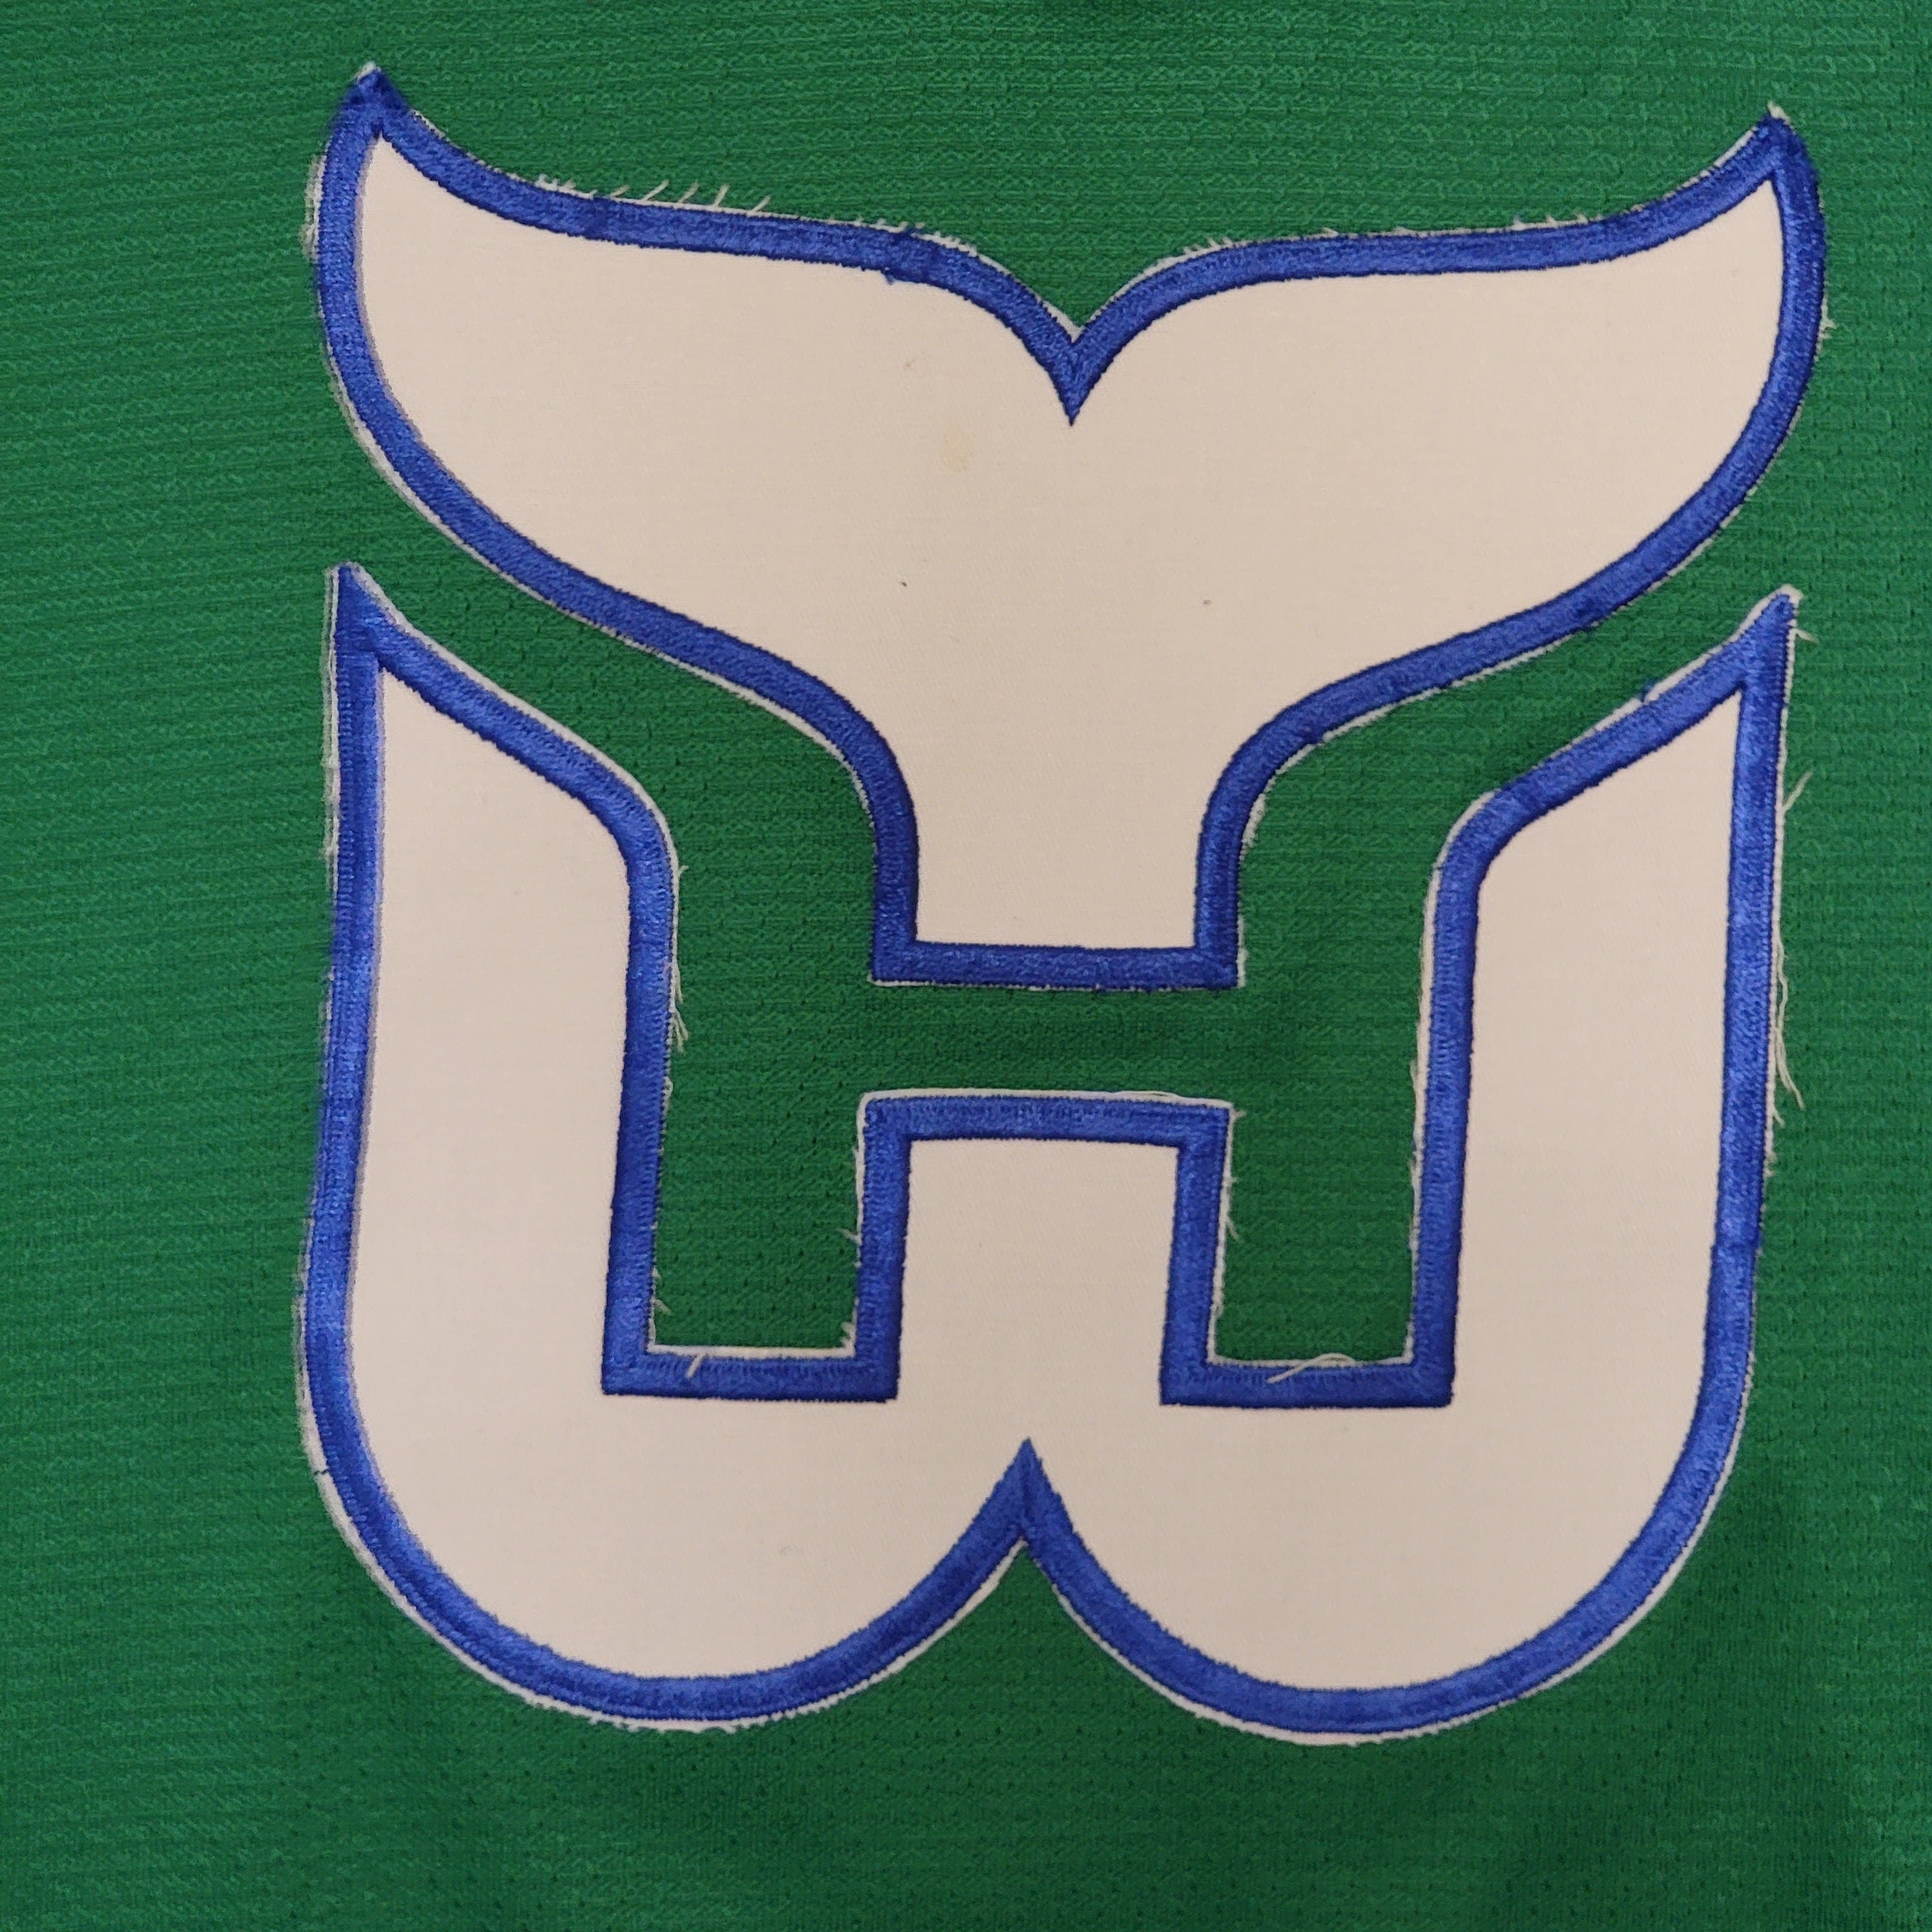 ThingsIBuyForYou Hartford Whalers Vintage CCM Maska Hockey Jersey (M)